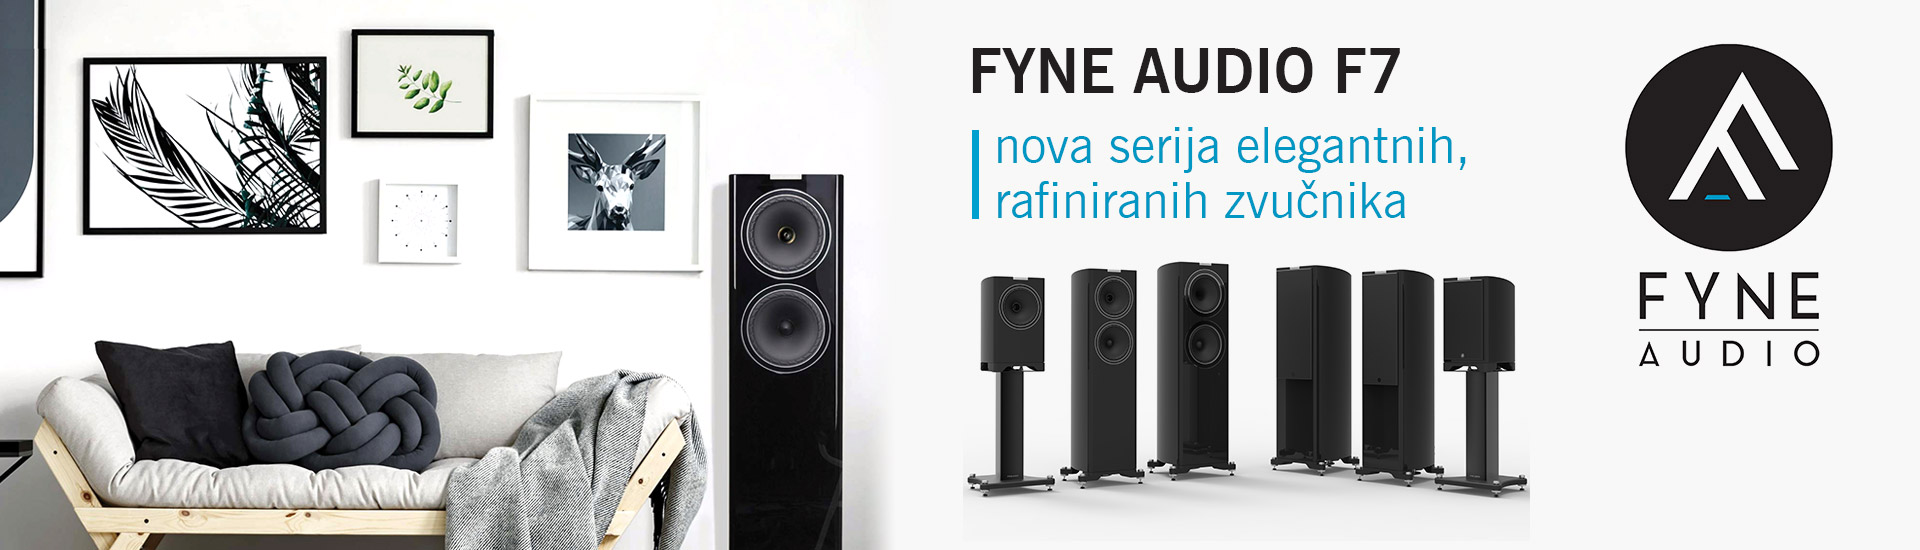 Fyne Audio F7 serija